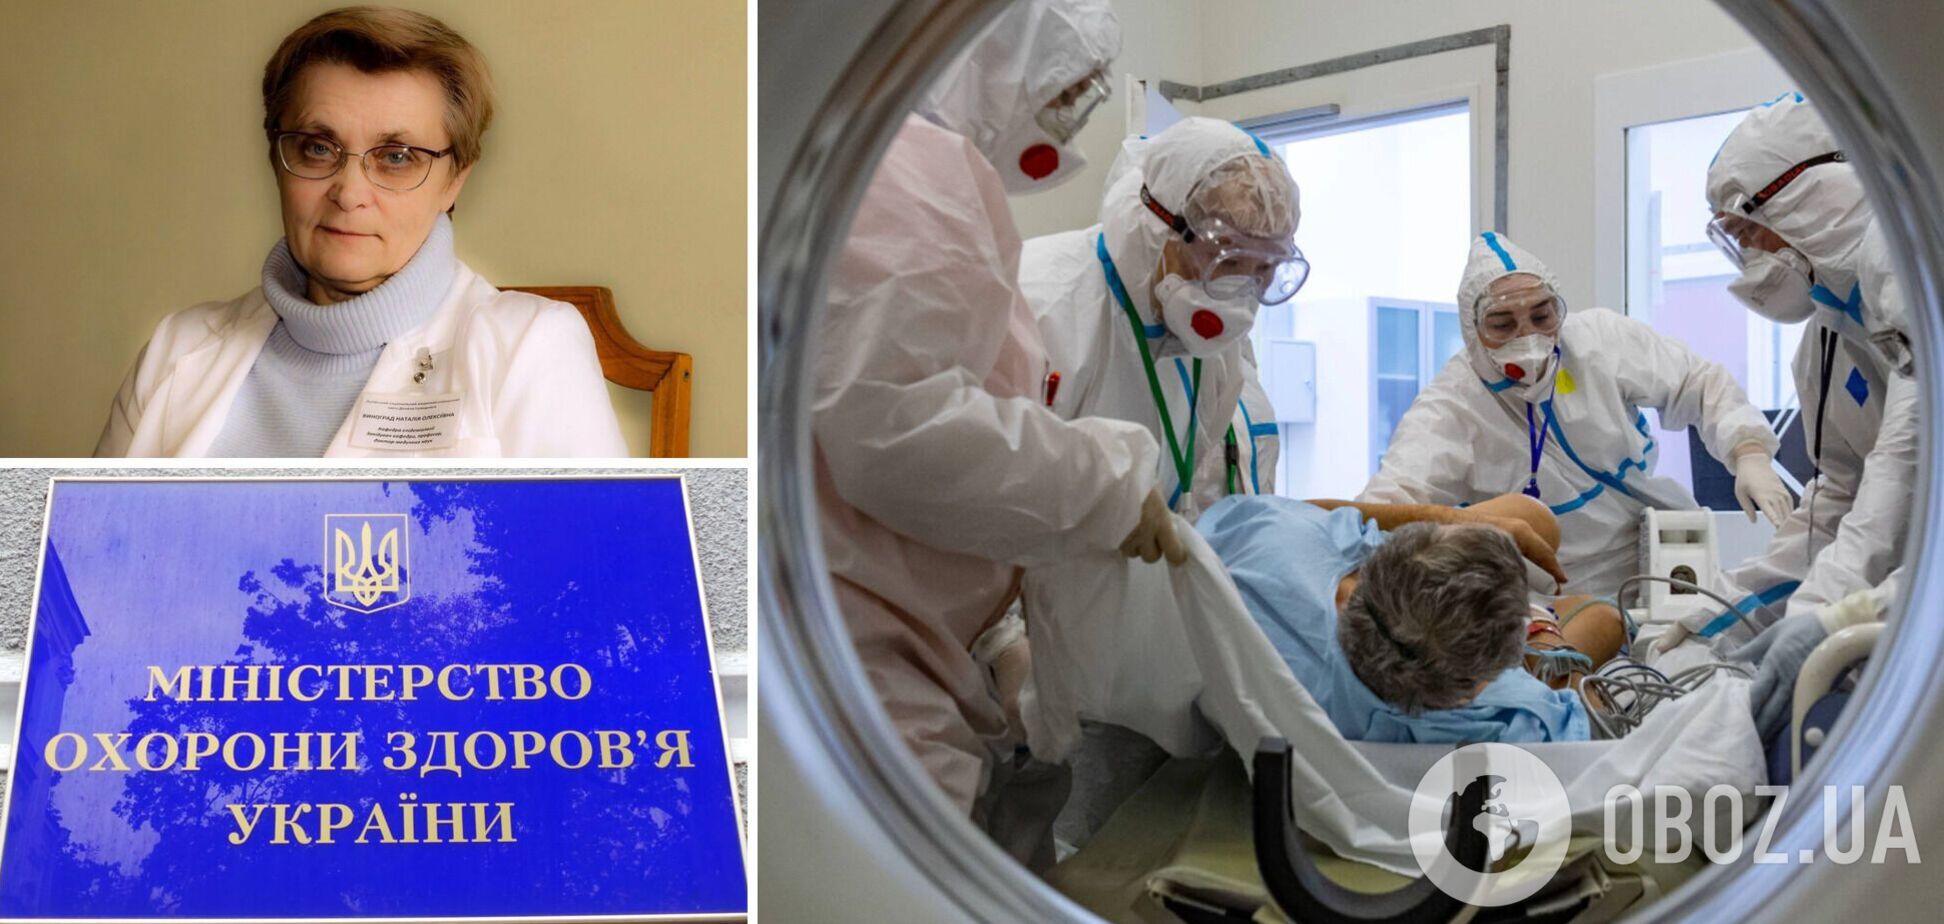 В Украине чрезвычайная ситуация с COVID-19 из-за ошибок Минздрава, – профессор